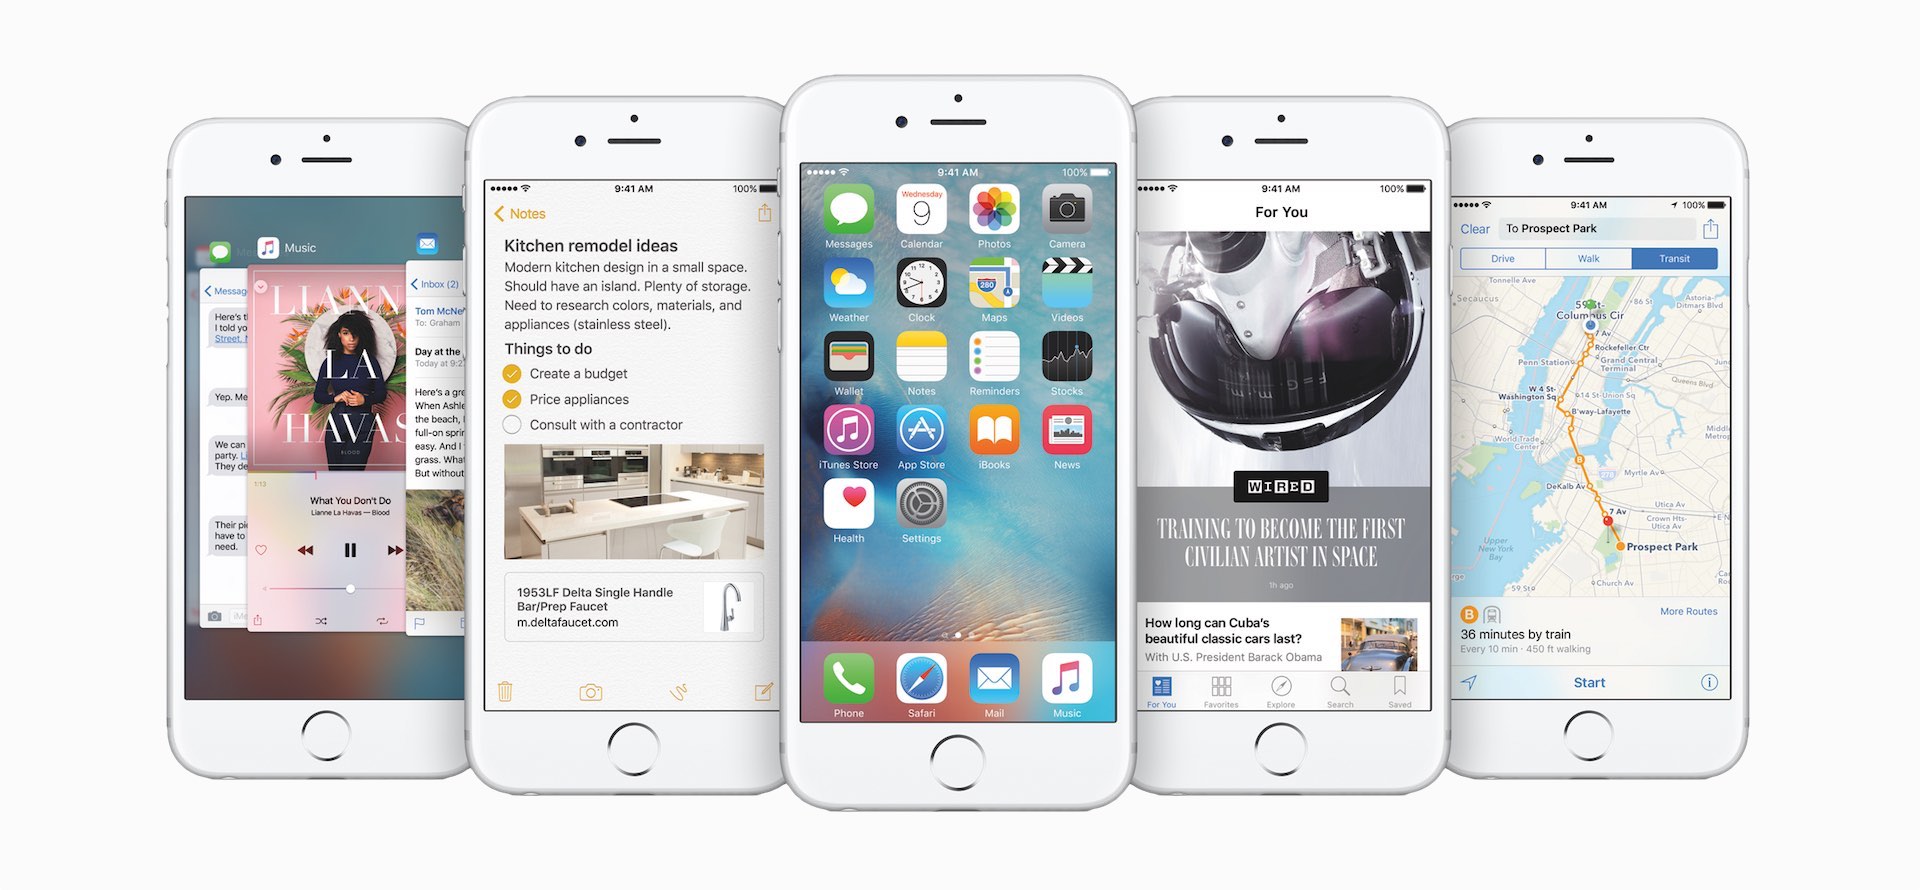 Apple's iOS devices